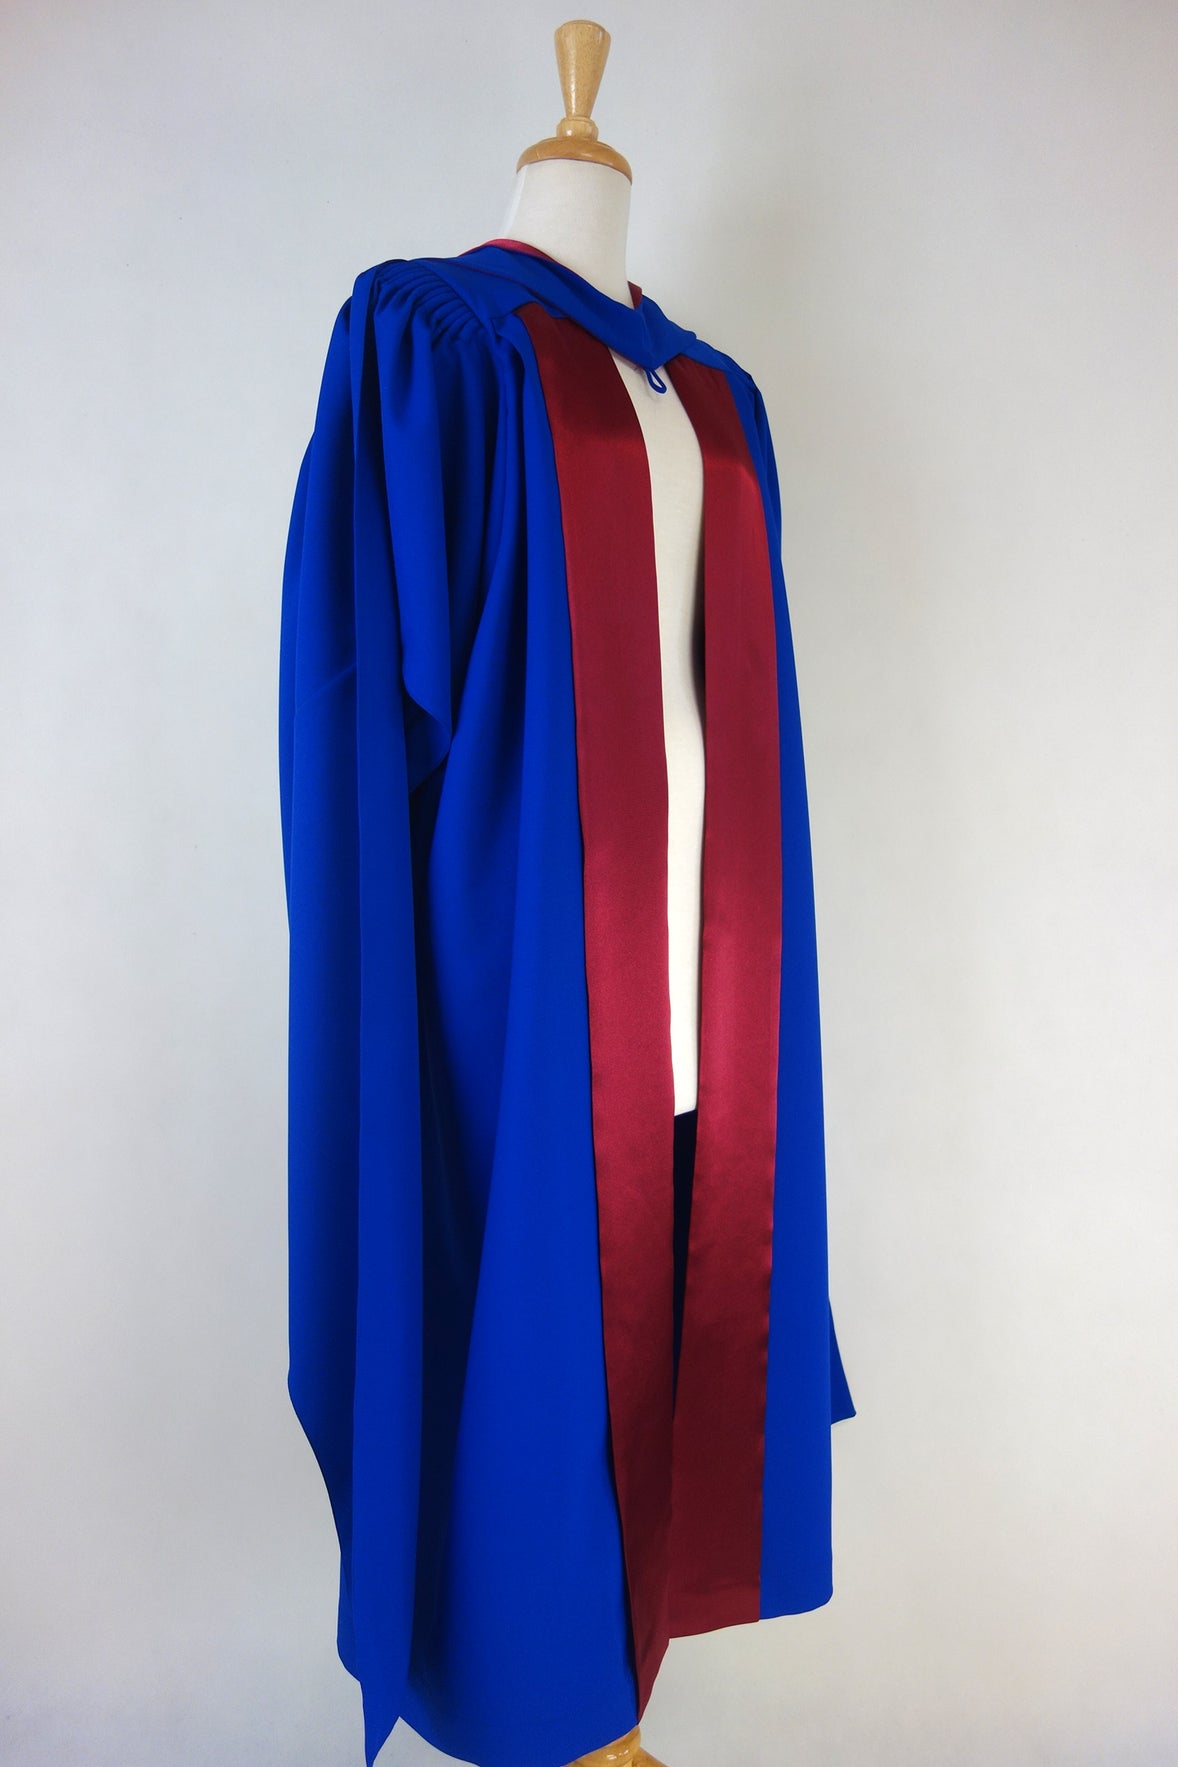 Federation University PhD Graduation Gown Set - Gown, Hood and Bonnet